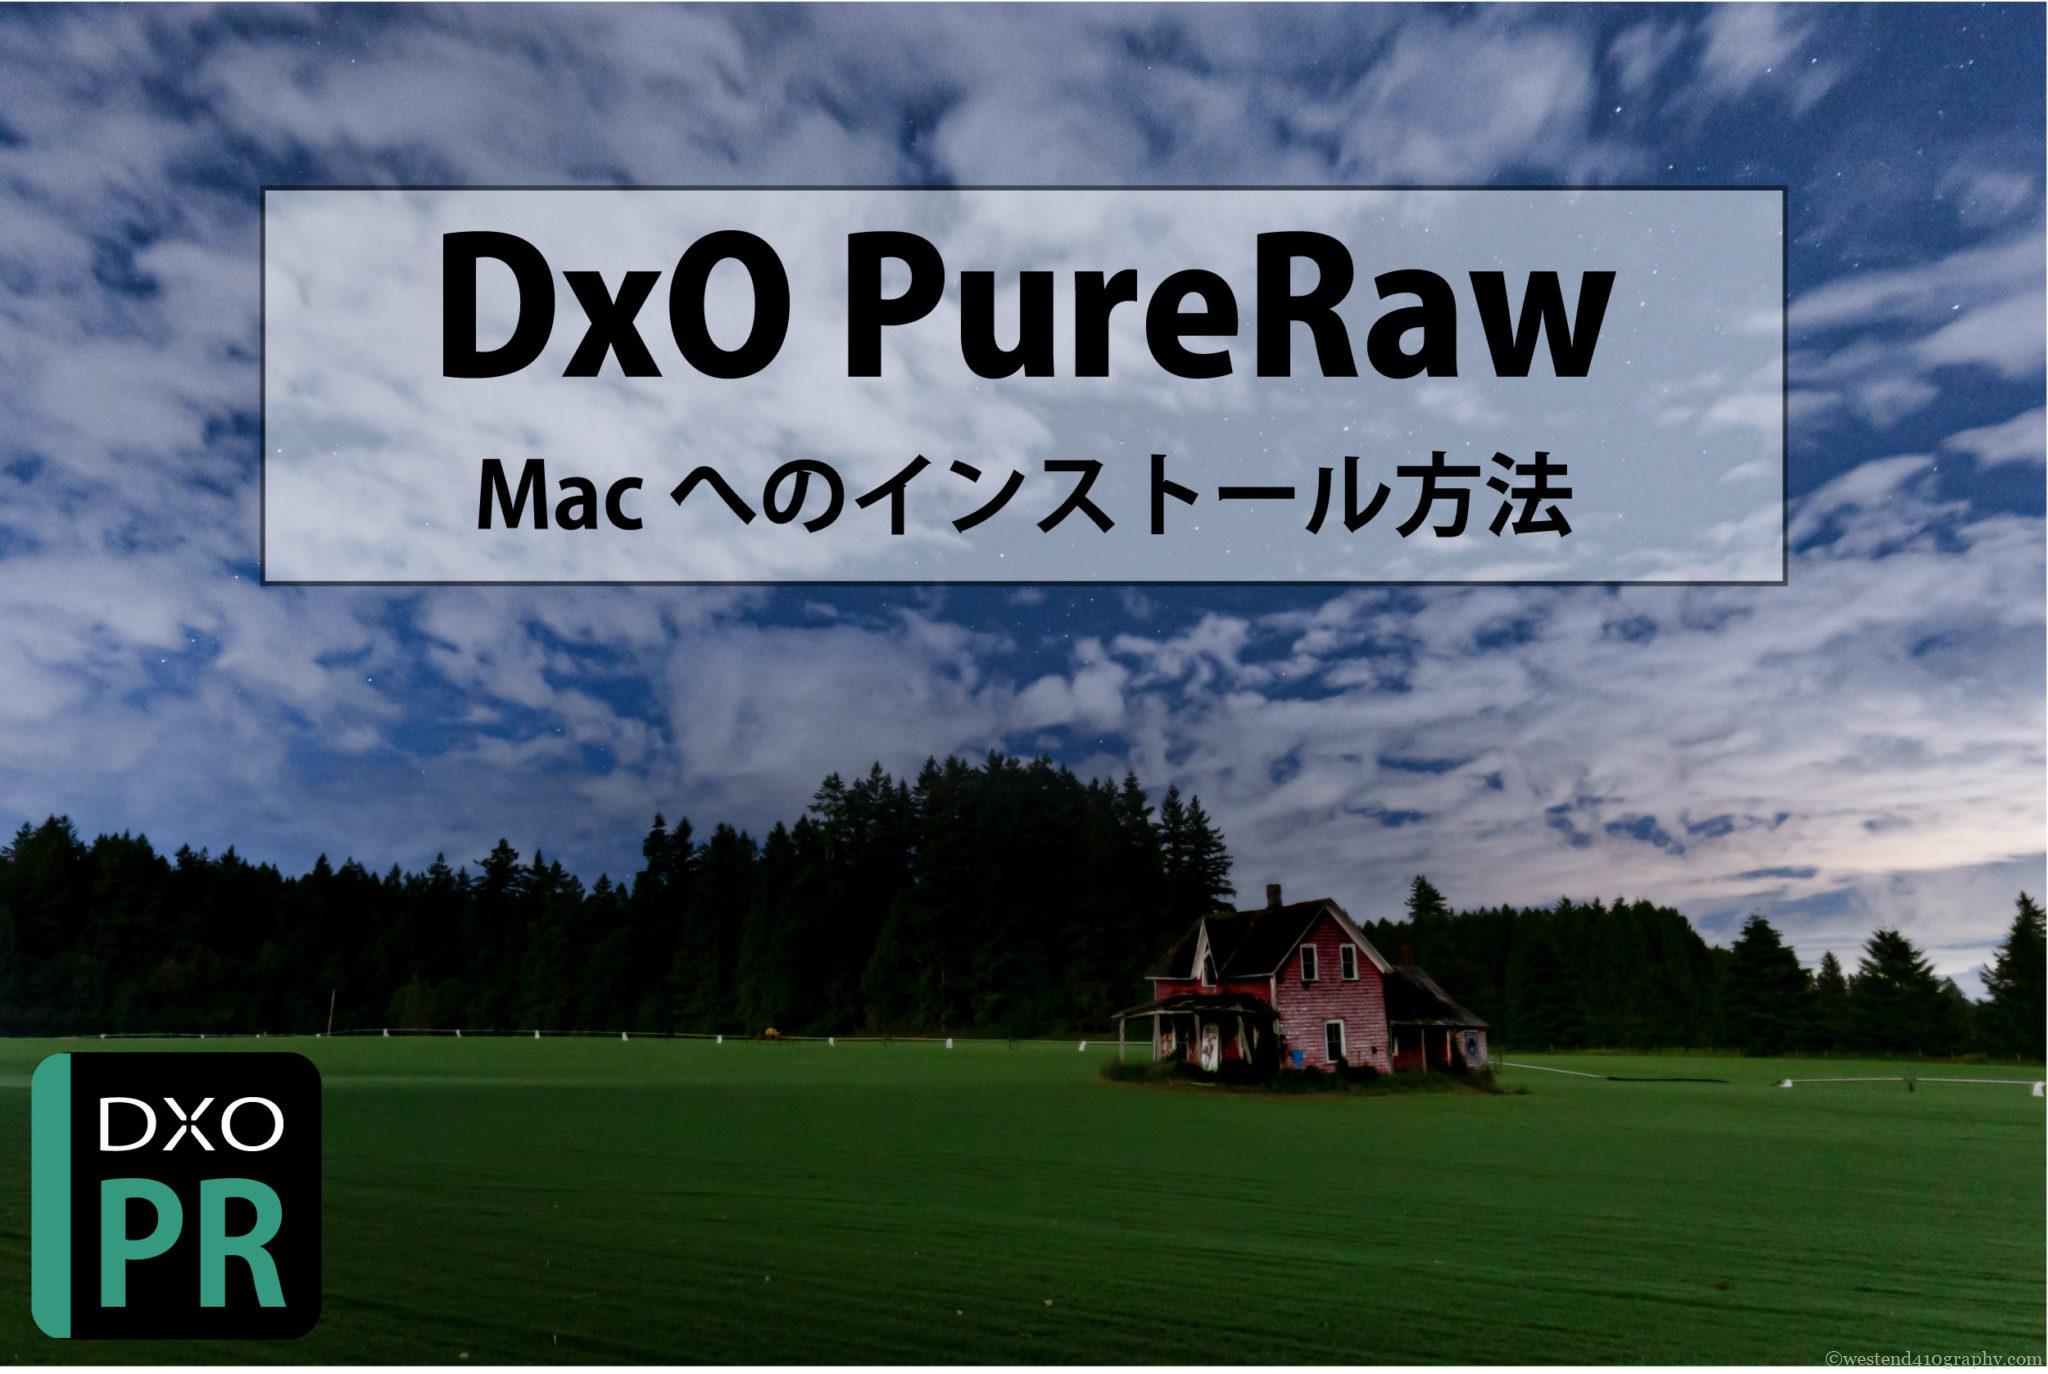 dxo pureraw mac